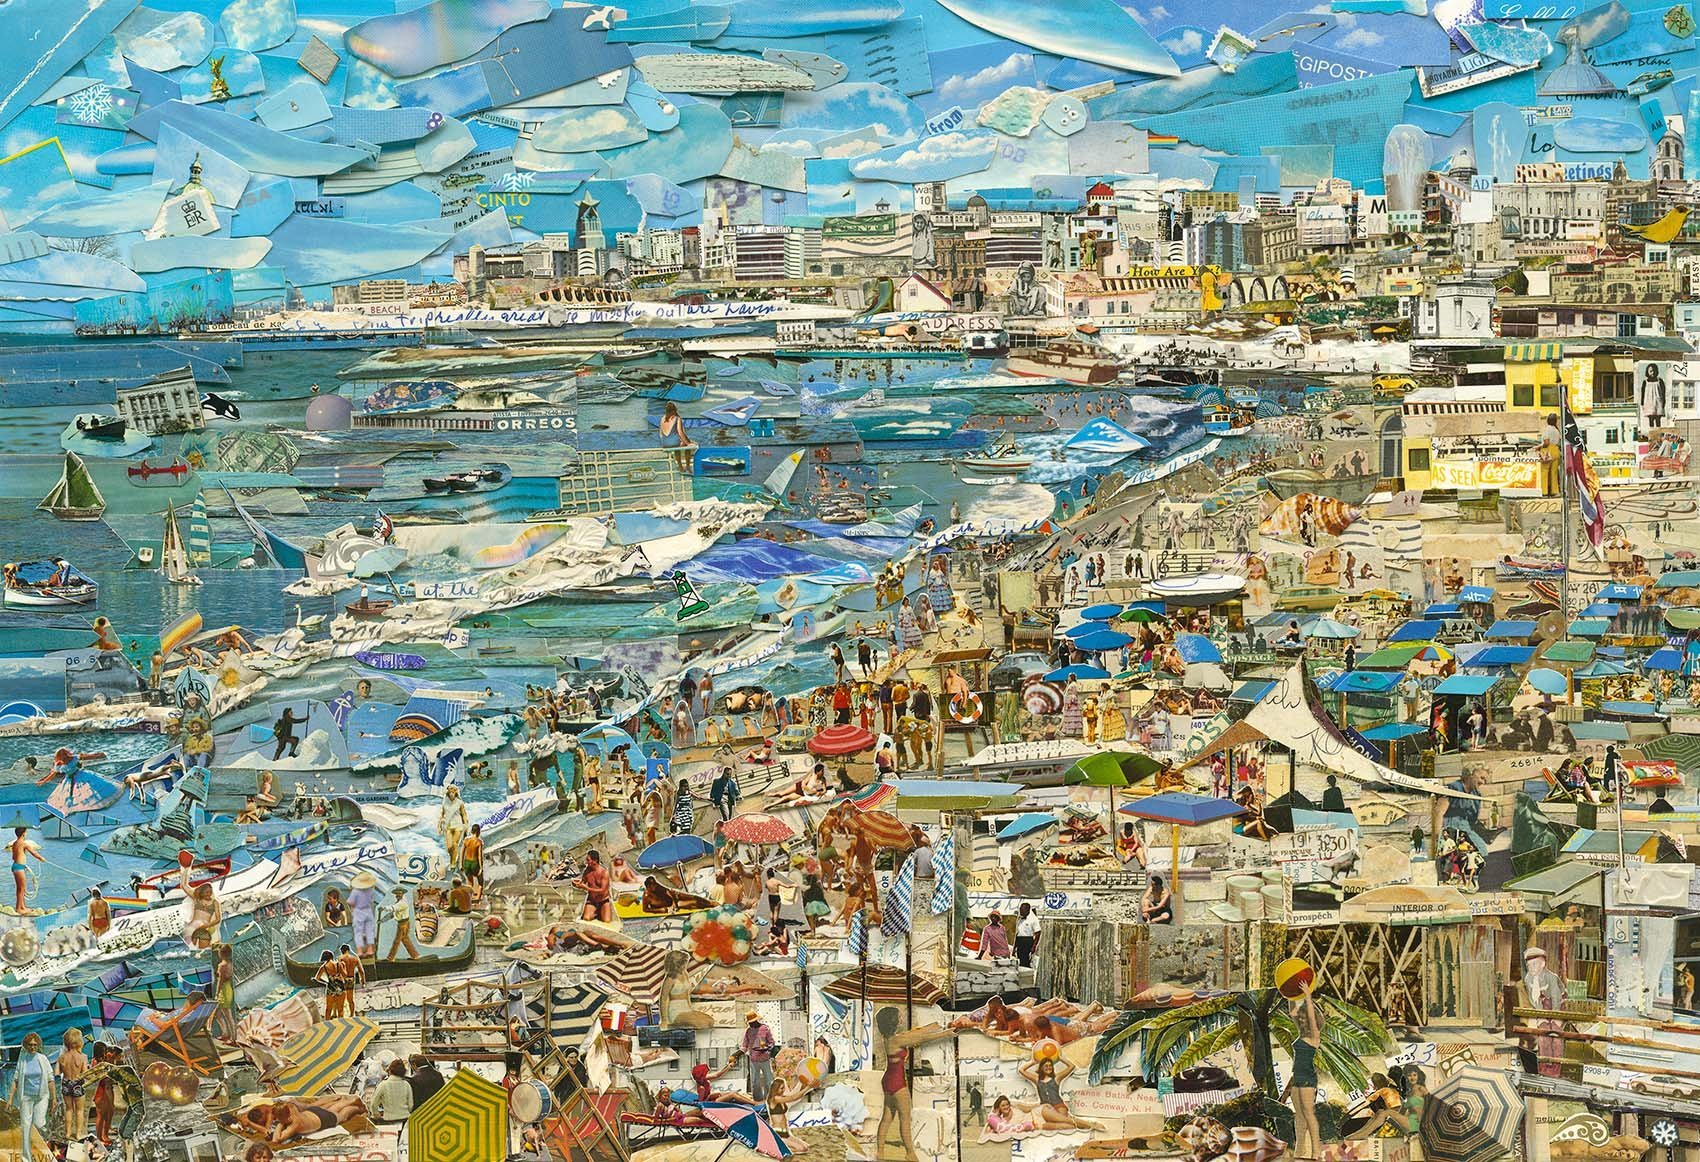  Vik Muniz,  Beach (from Postcards from Nowhere) , 2014. Digital C-print. 71 x 103.7 inches.  